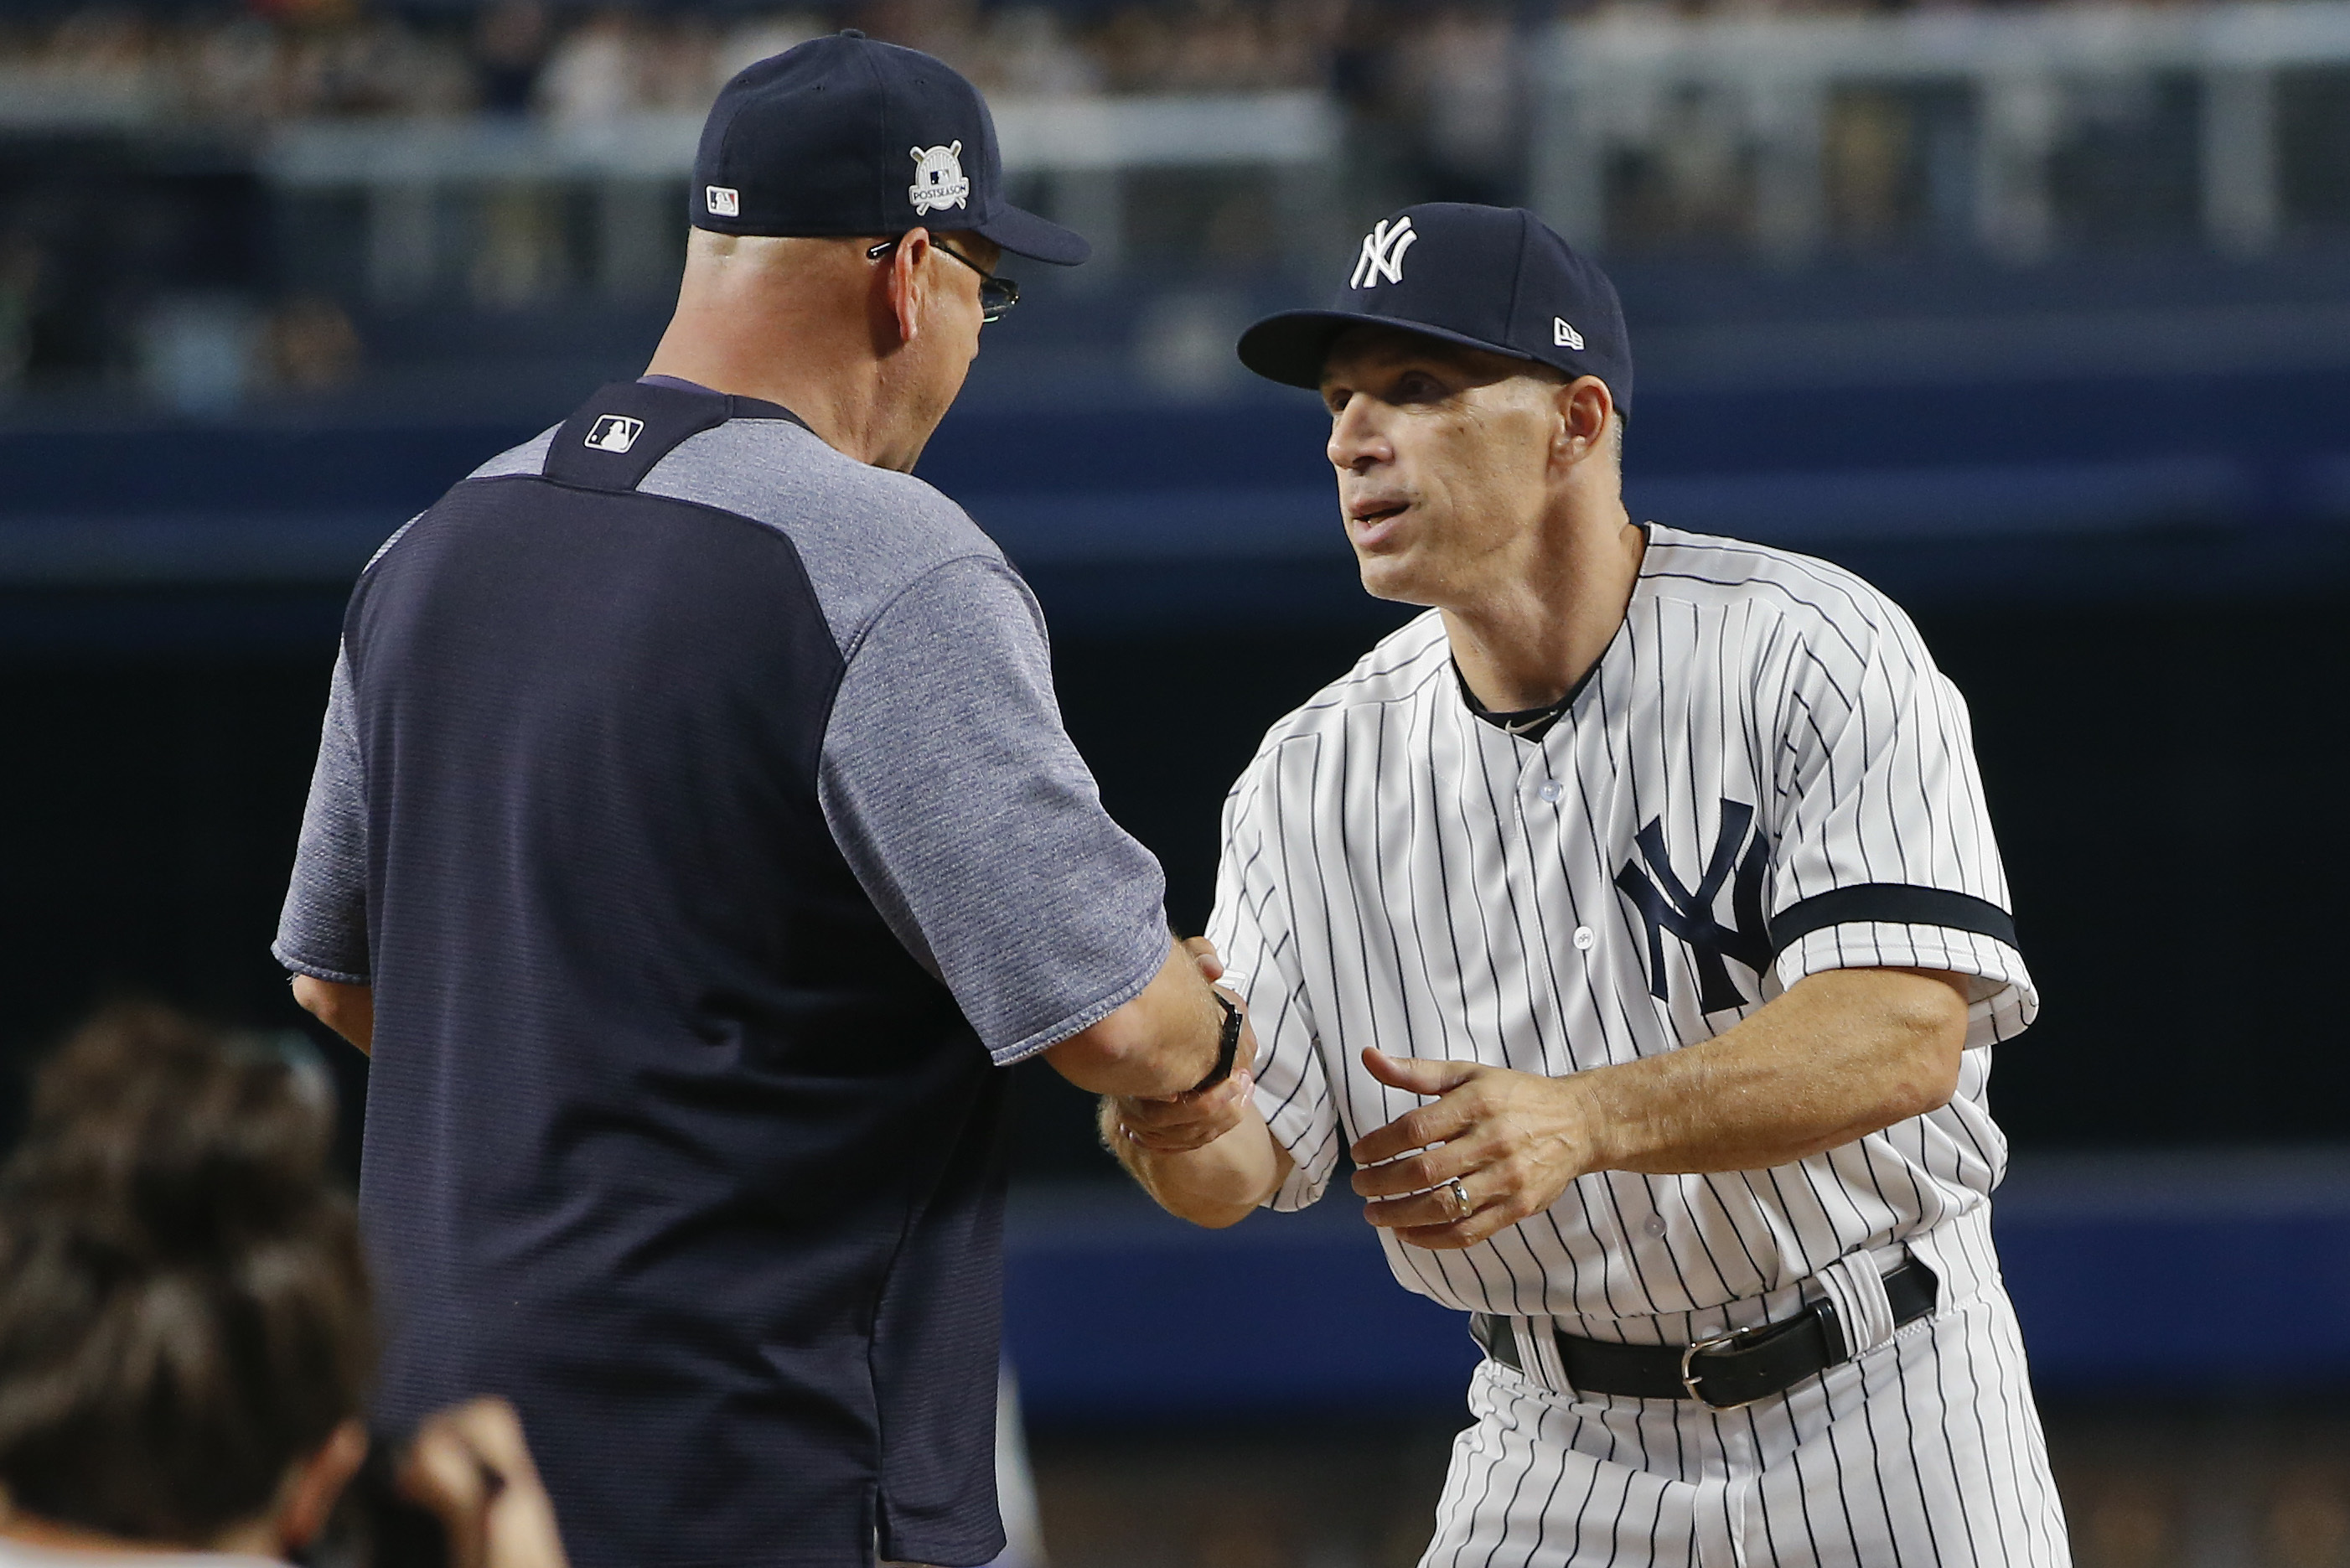 New York Yankees manager JOE GIRARDI takes the ball from BRYAN